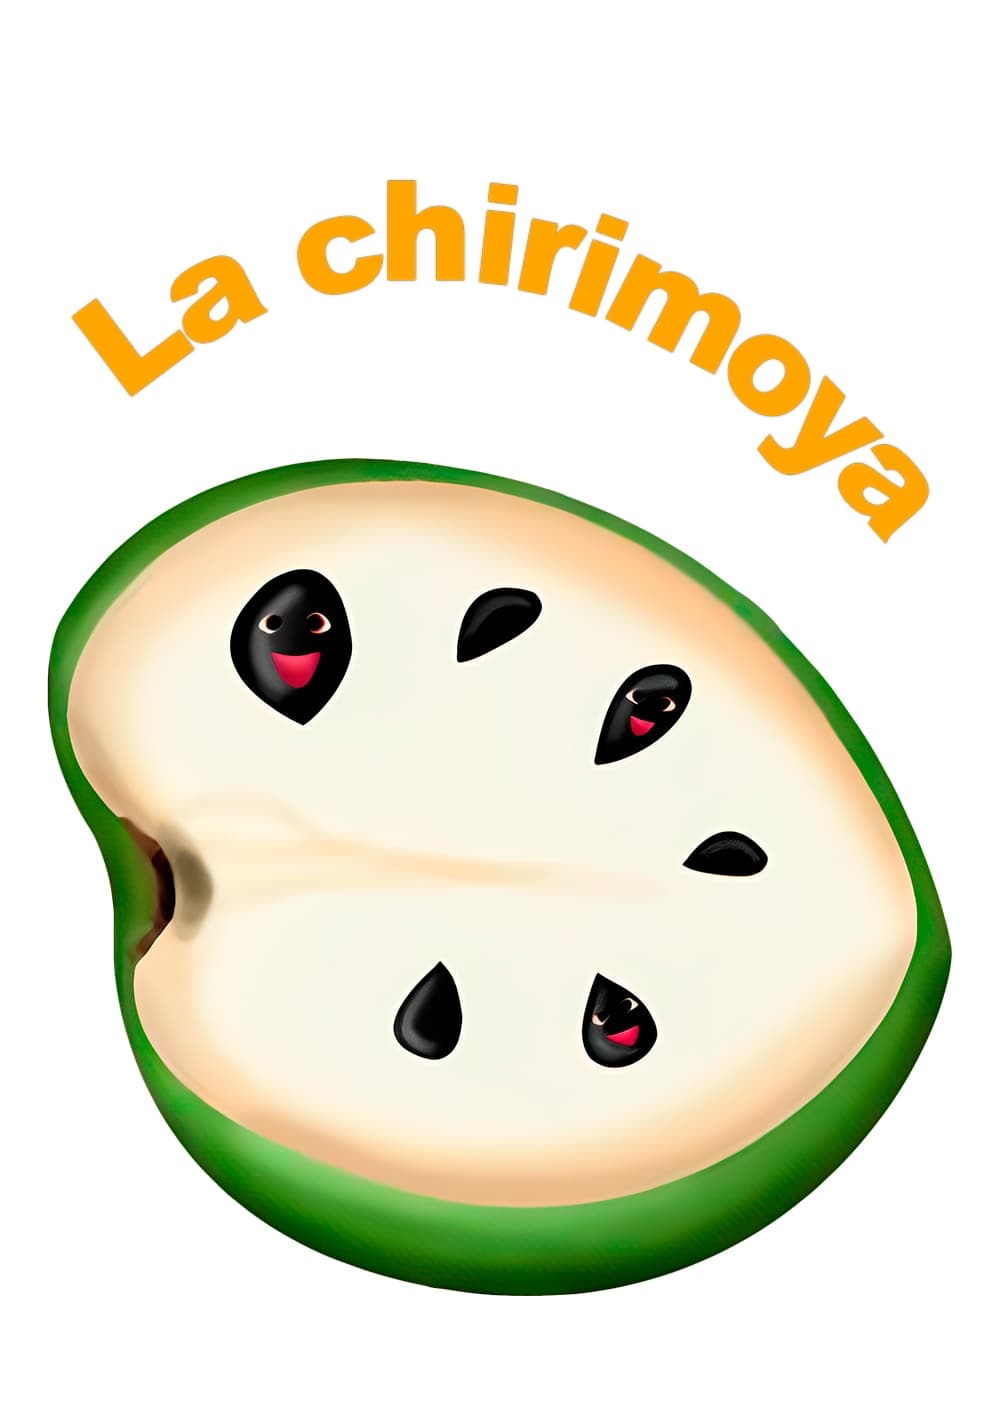 La Chirimoya